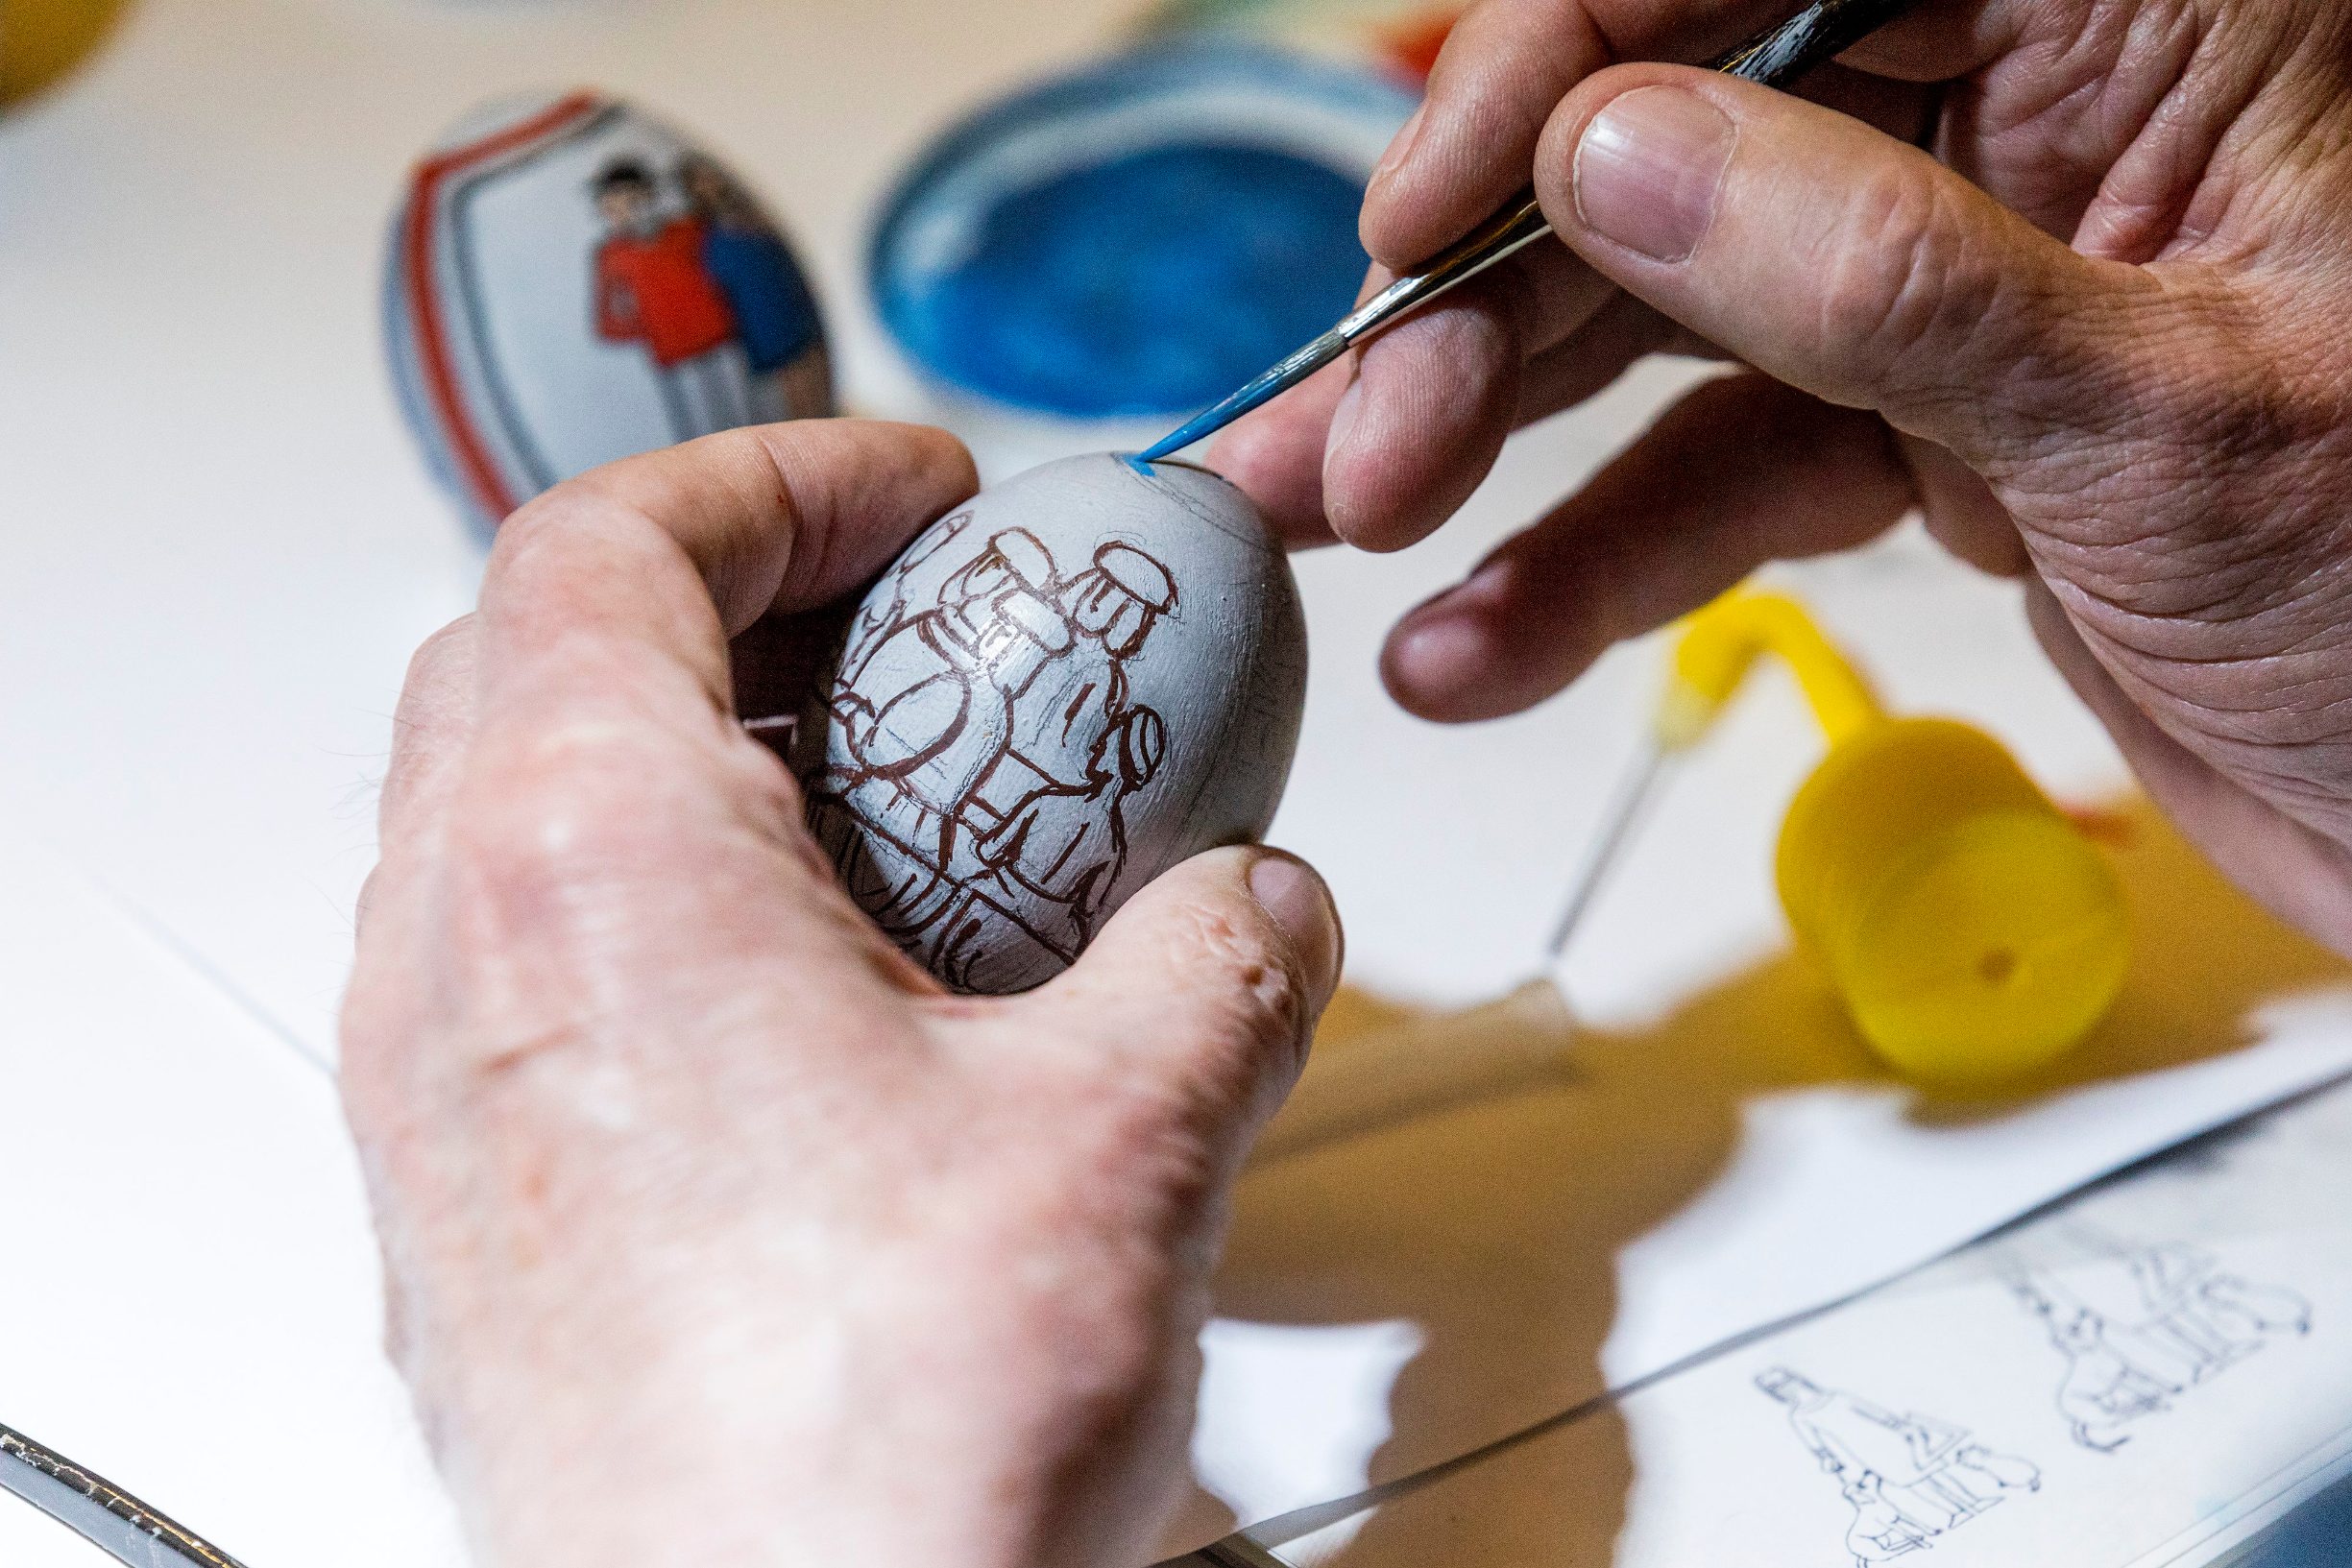 Zagreb, 070420.
Jurisiceva.
Umirovljeni animator Tomislav Sporis pokazuje kako oslikava svoja uskrsnja jaja.
Na fotografiji: cetvrti korak, podebljavanje kontura.
Foto: Tomislav Kristo / CROPIX